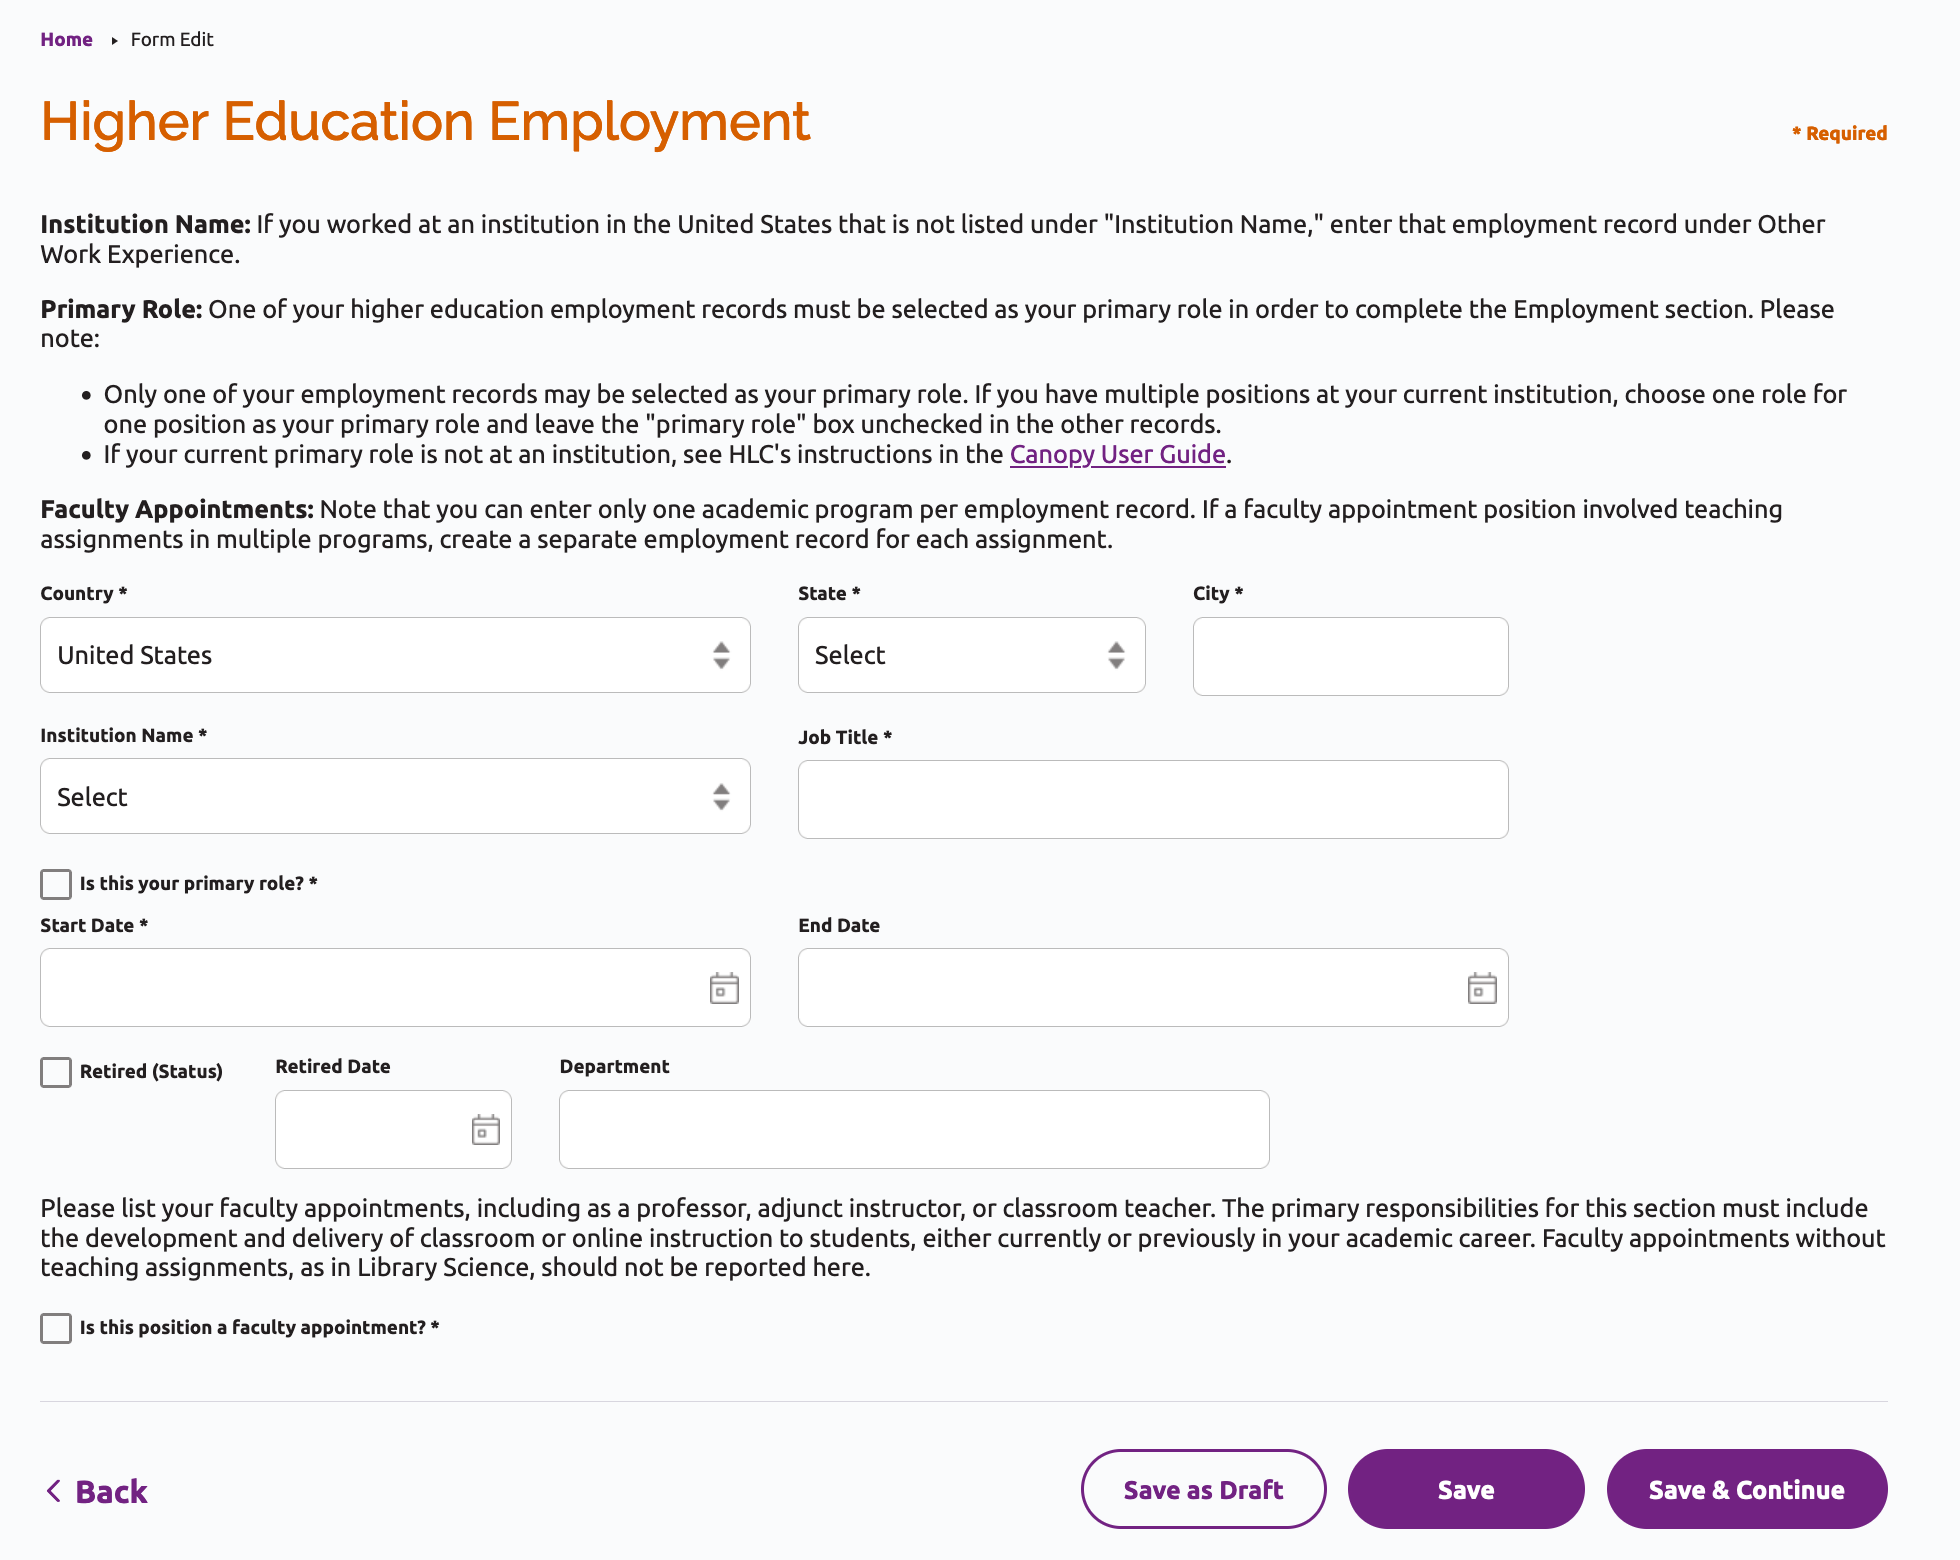 Higher Education Employment edit screen